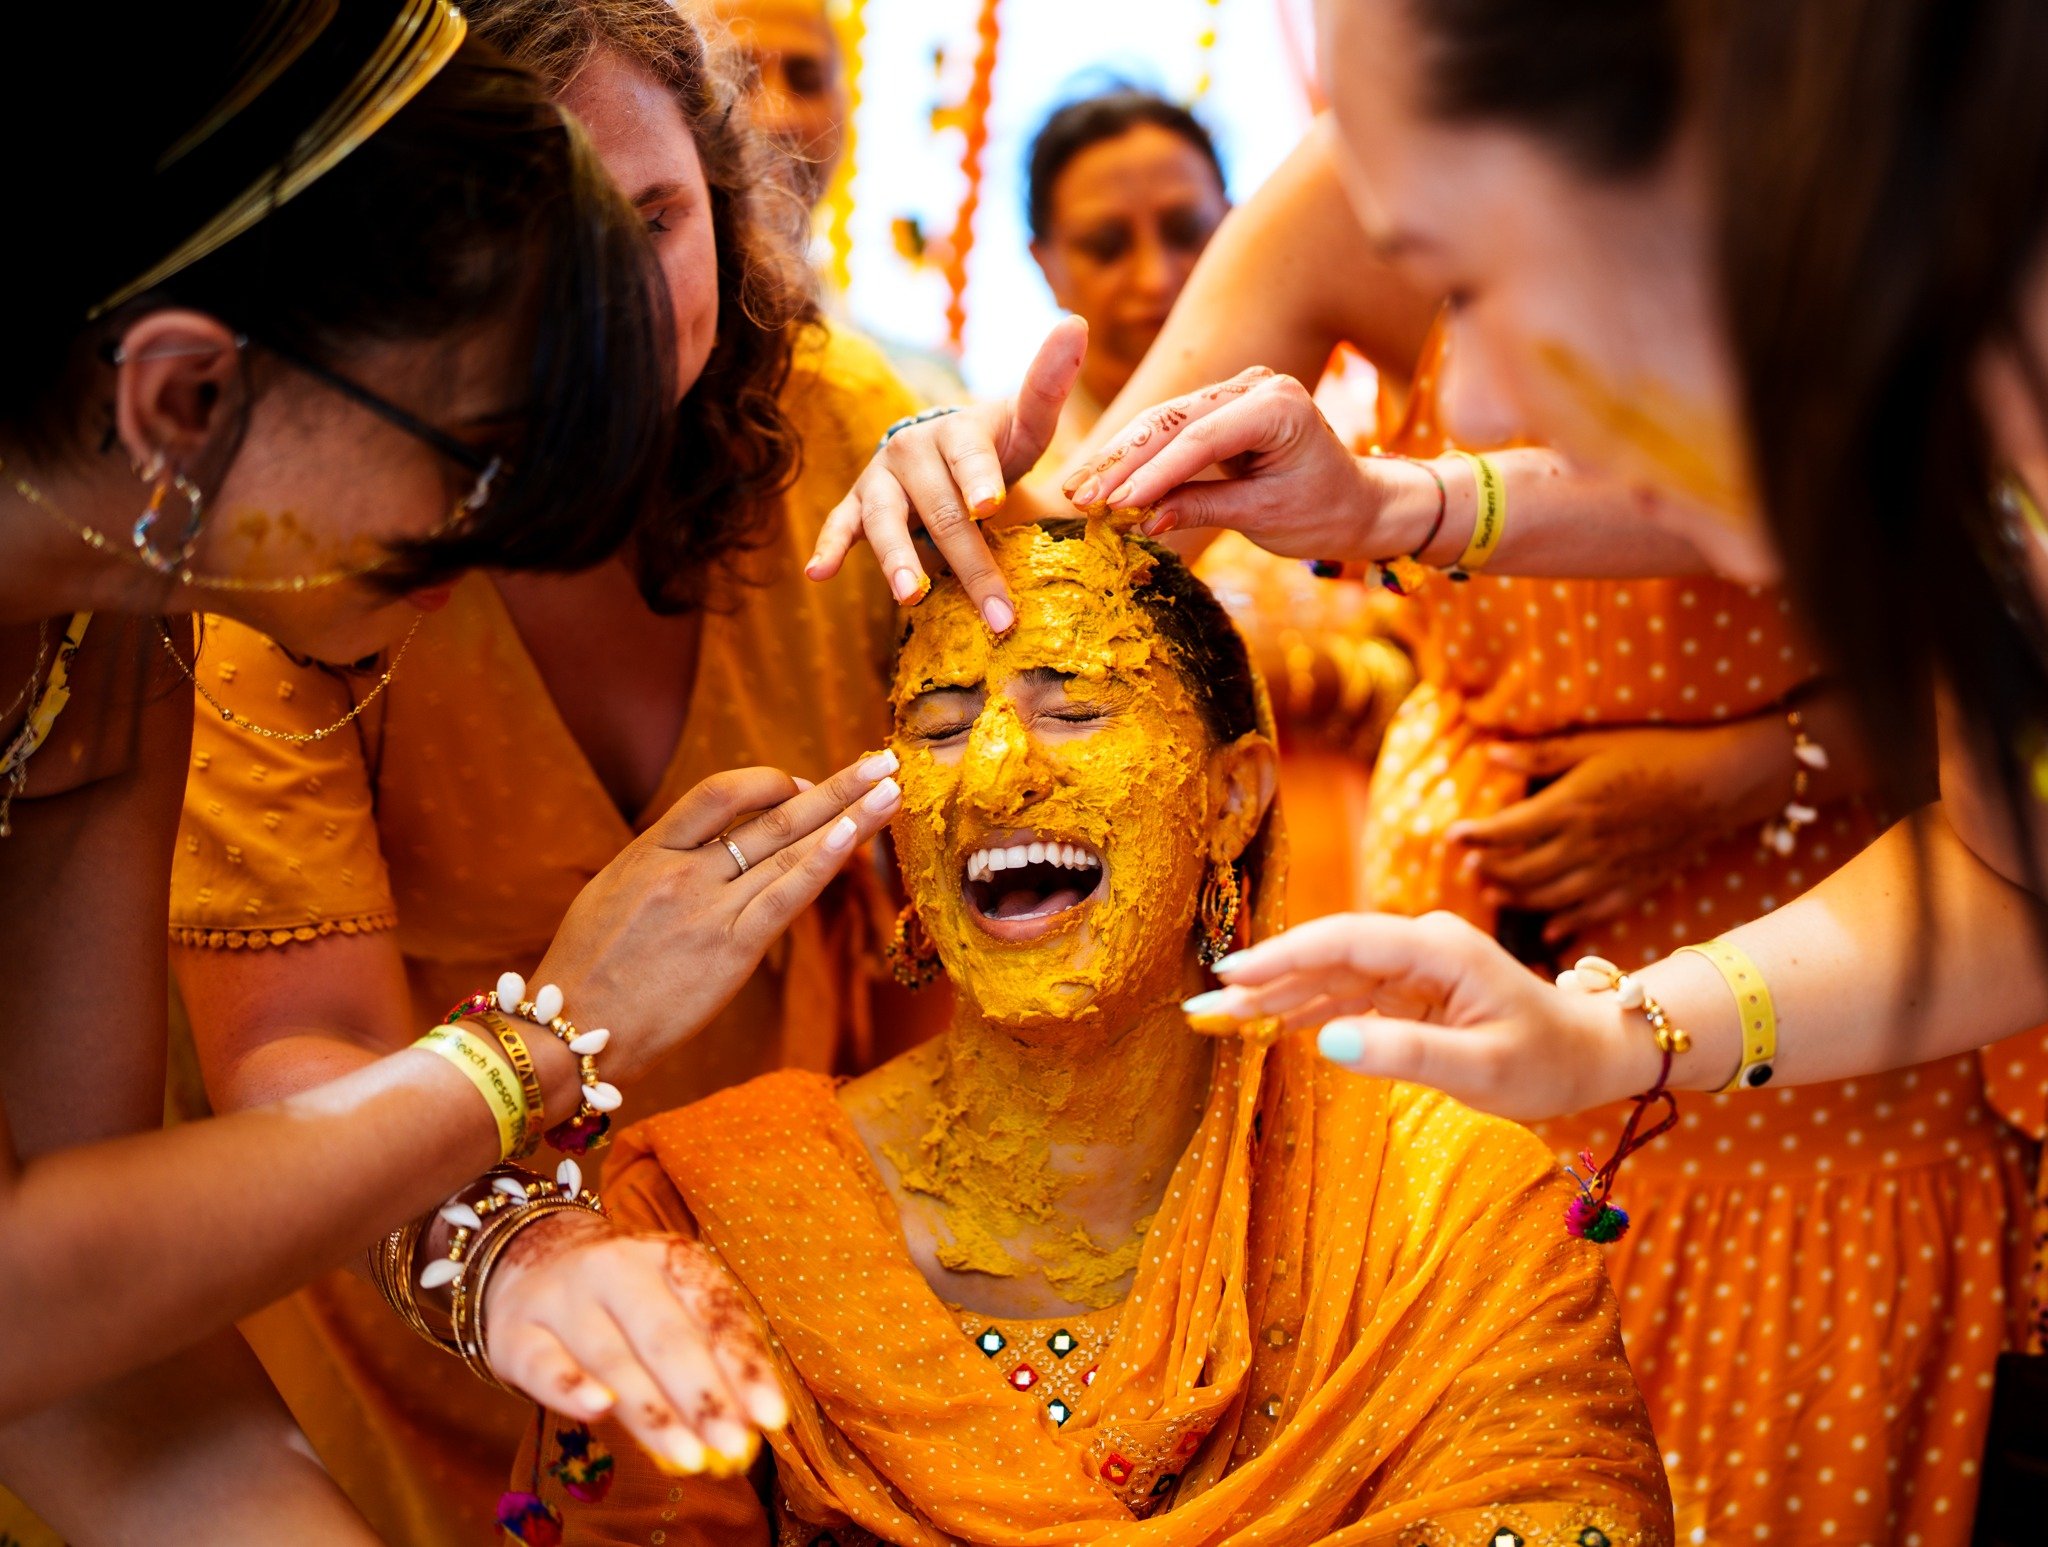 K//S - yellow! 

#cheka #indianwedding #weddingsutra #utterlyengaged #weddinglegends #belovedstories #wedphotoinspiration #loveauthentic #loveintentionally #destinationwedding #weddinginspo #fearlessphotographer #bestkenyanweddingphotographer #destin